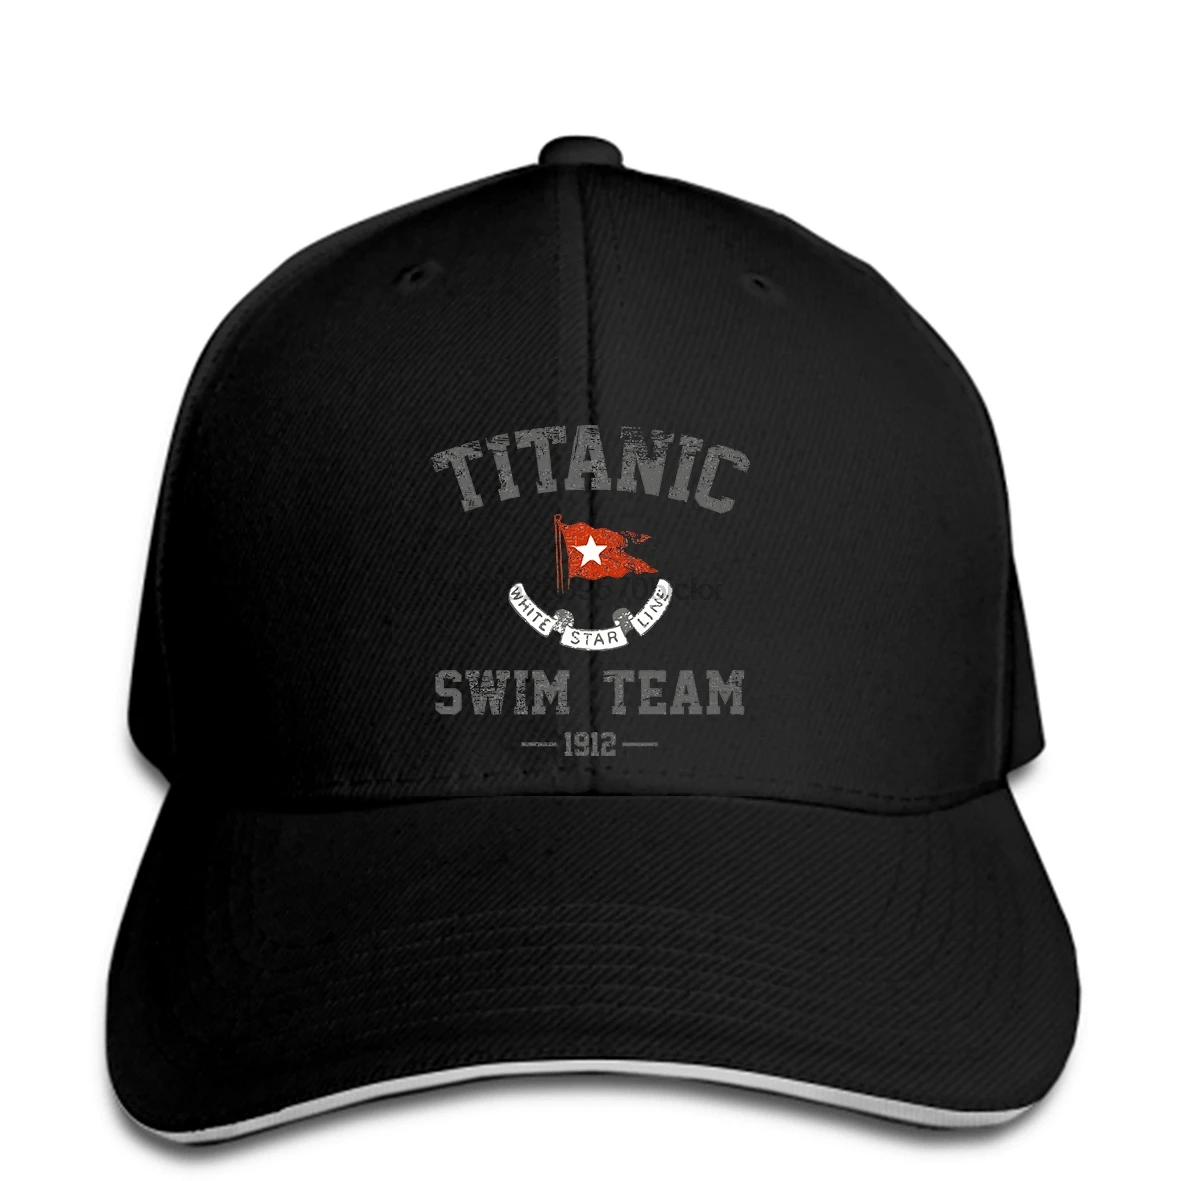 Titanic swim Team белая звезда линия 1912 бейсбольная кепка бейсболка шапка | Аксессуары